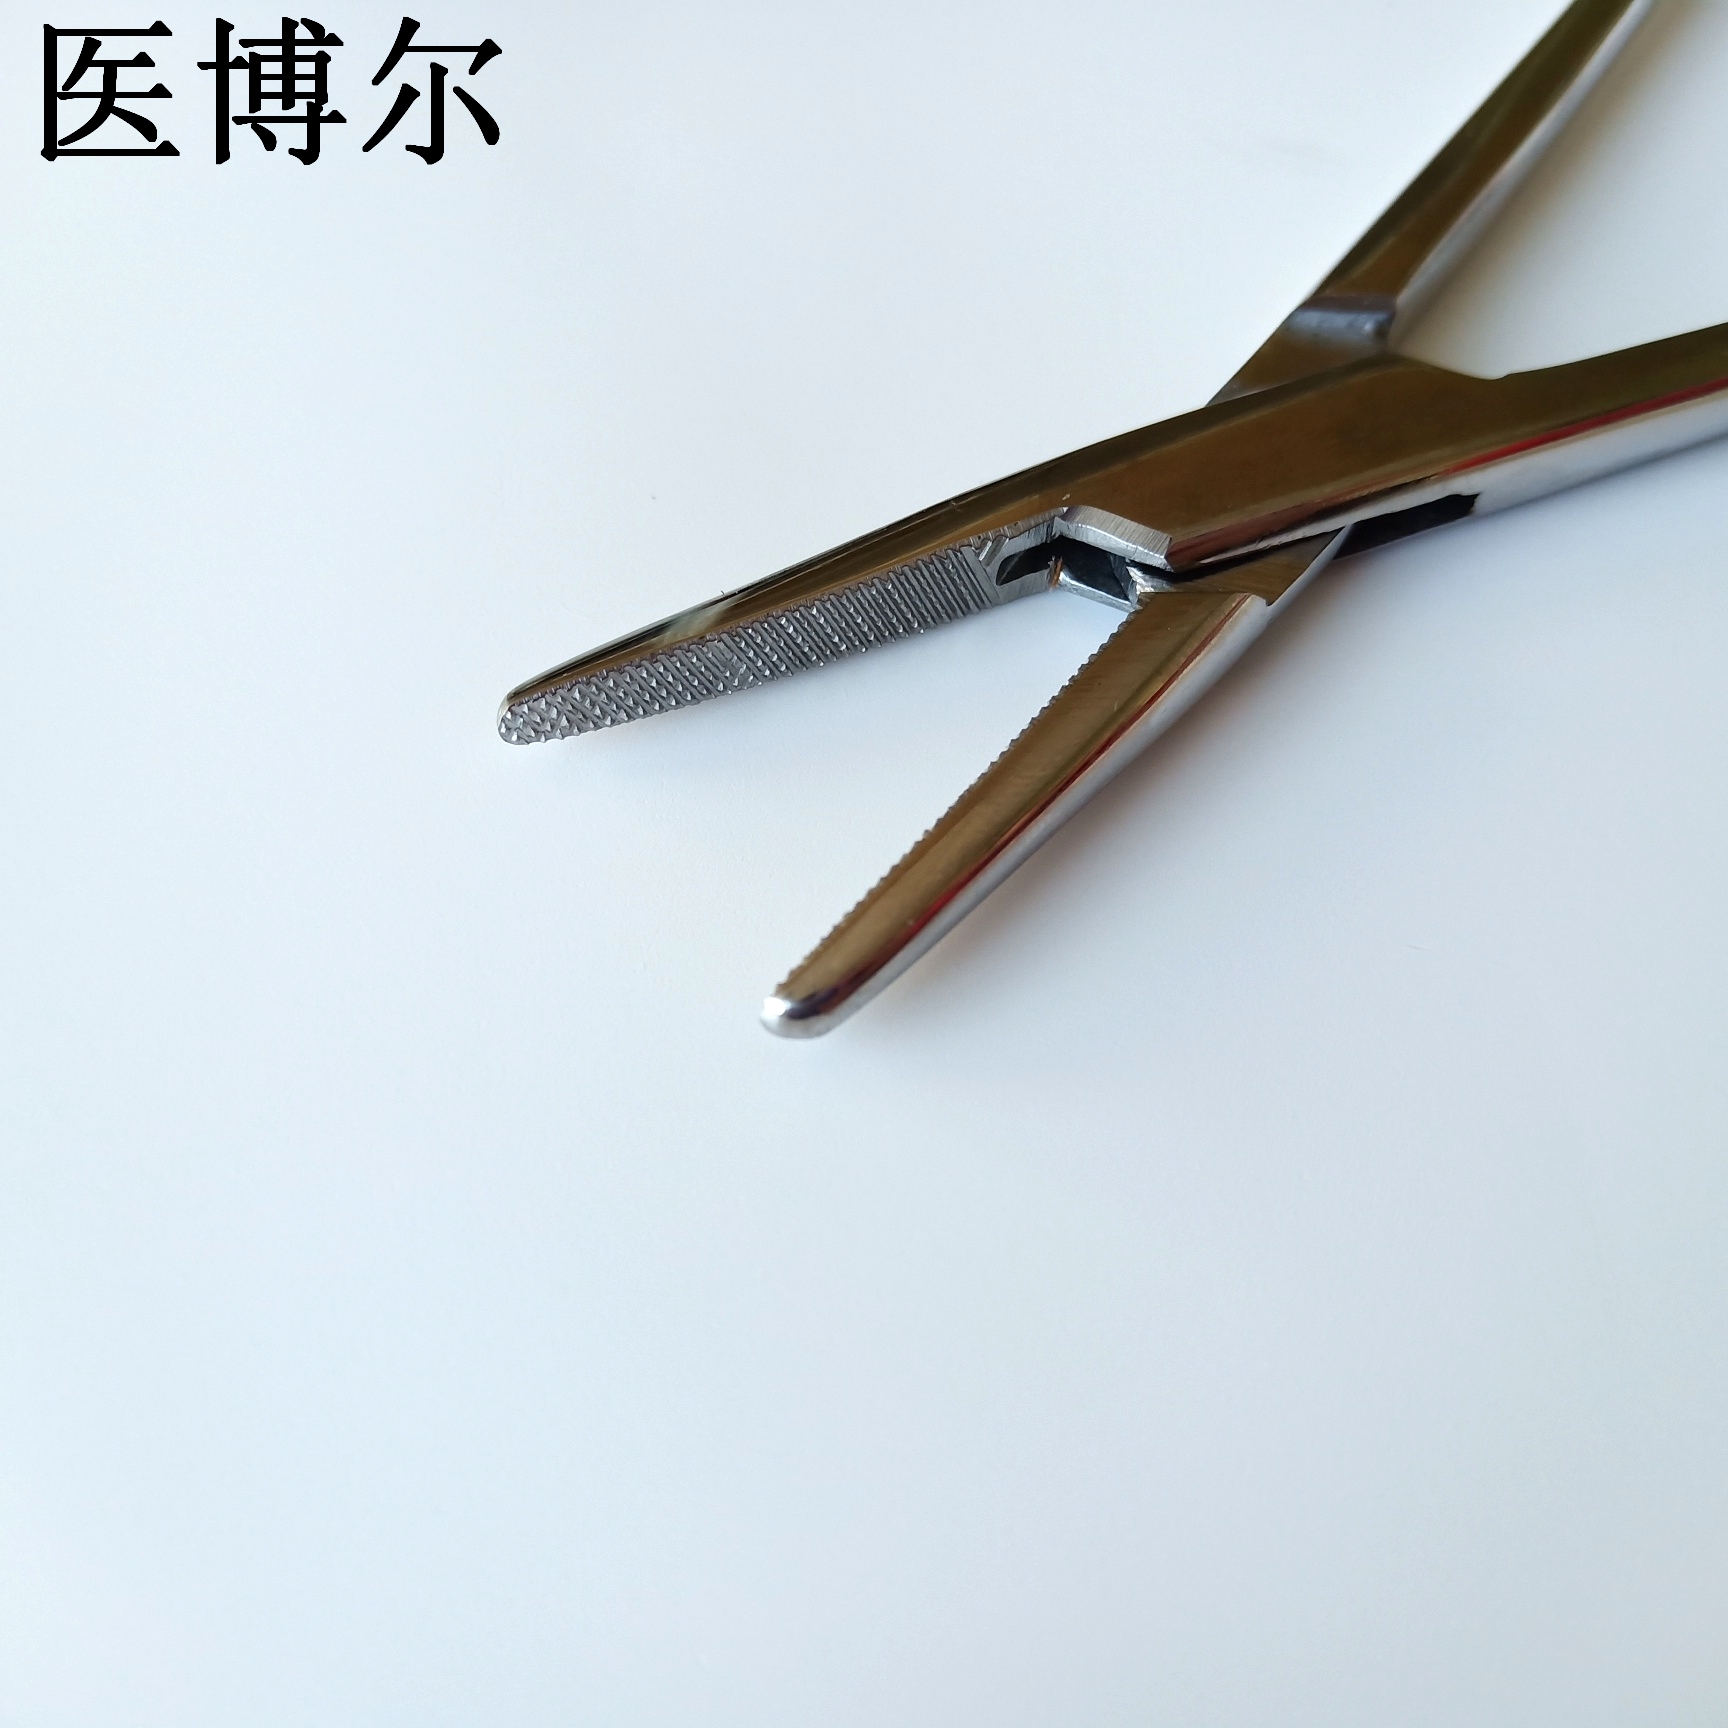 24cm持针器 (3)_看图王.jpg